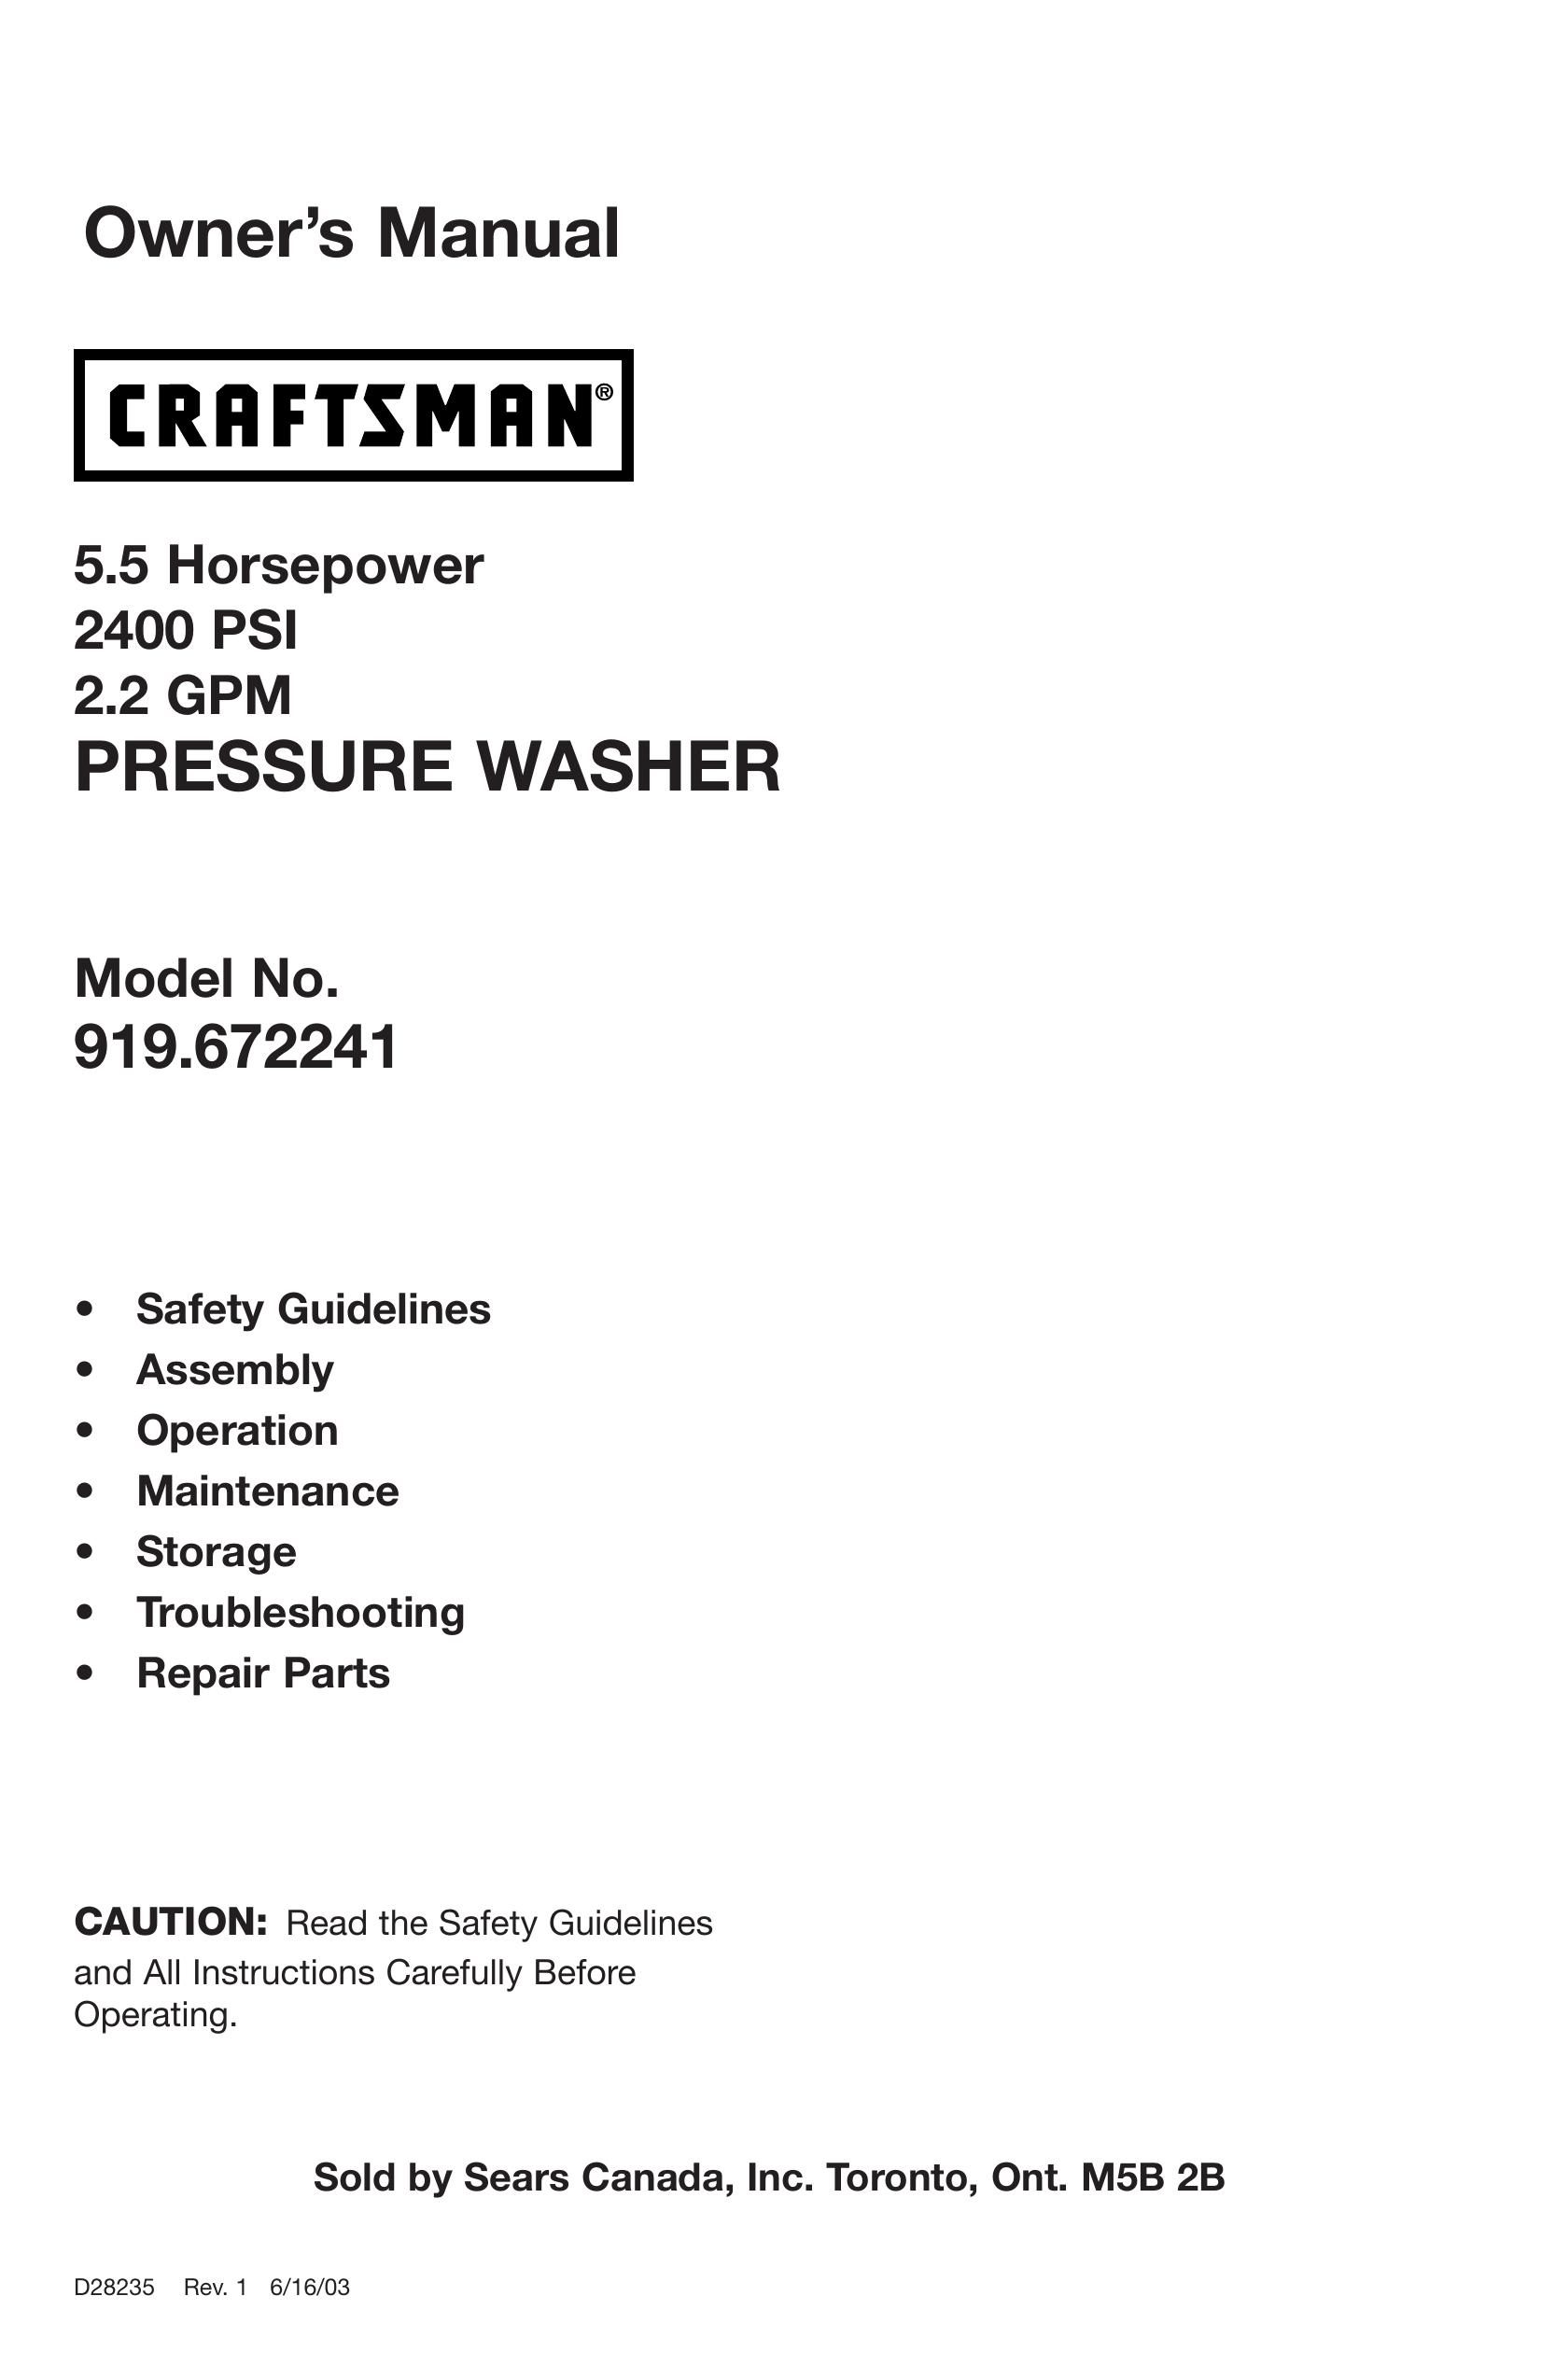 Craftsman 919.672241 Pressure Washer User Manual